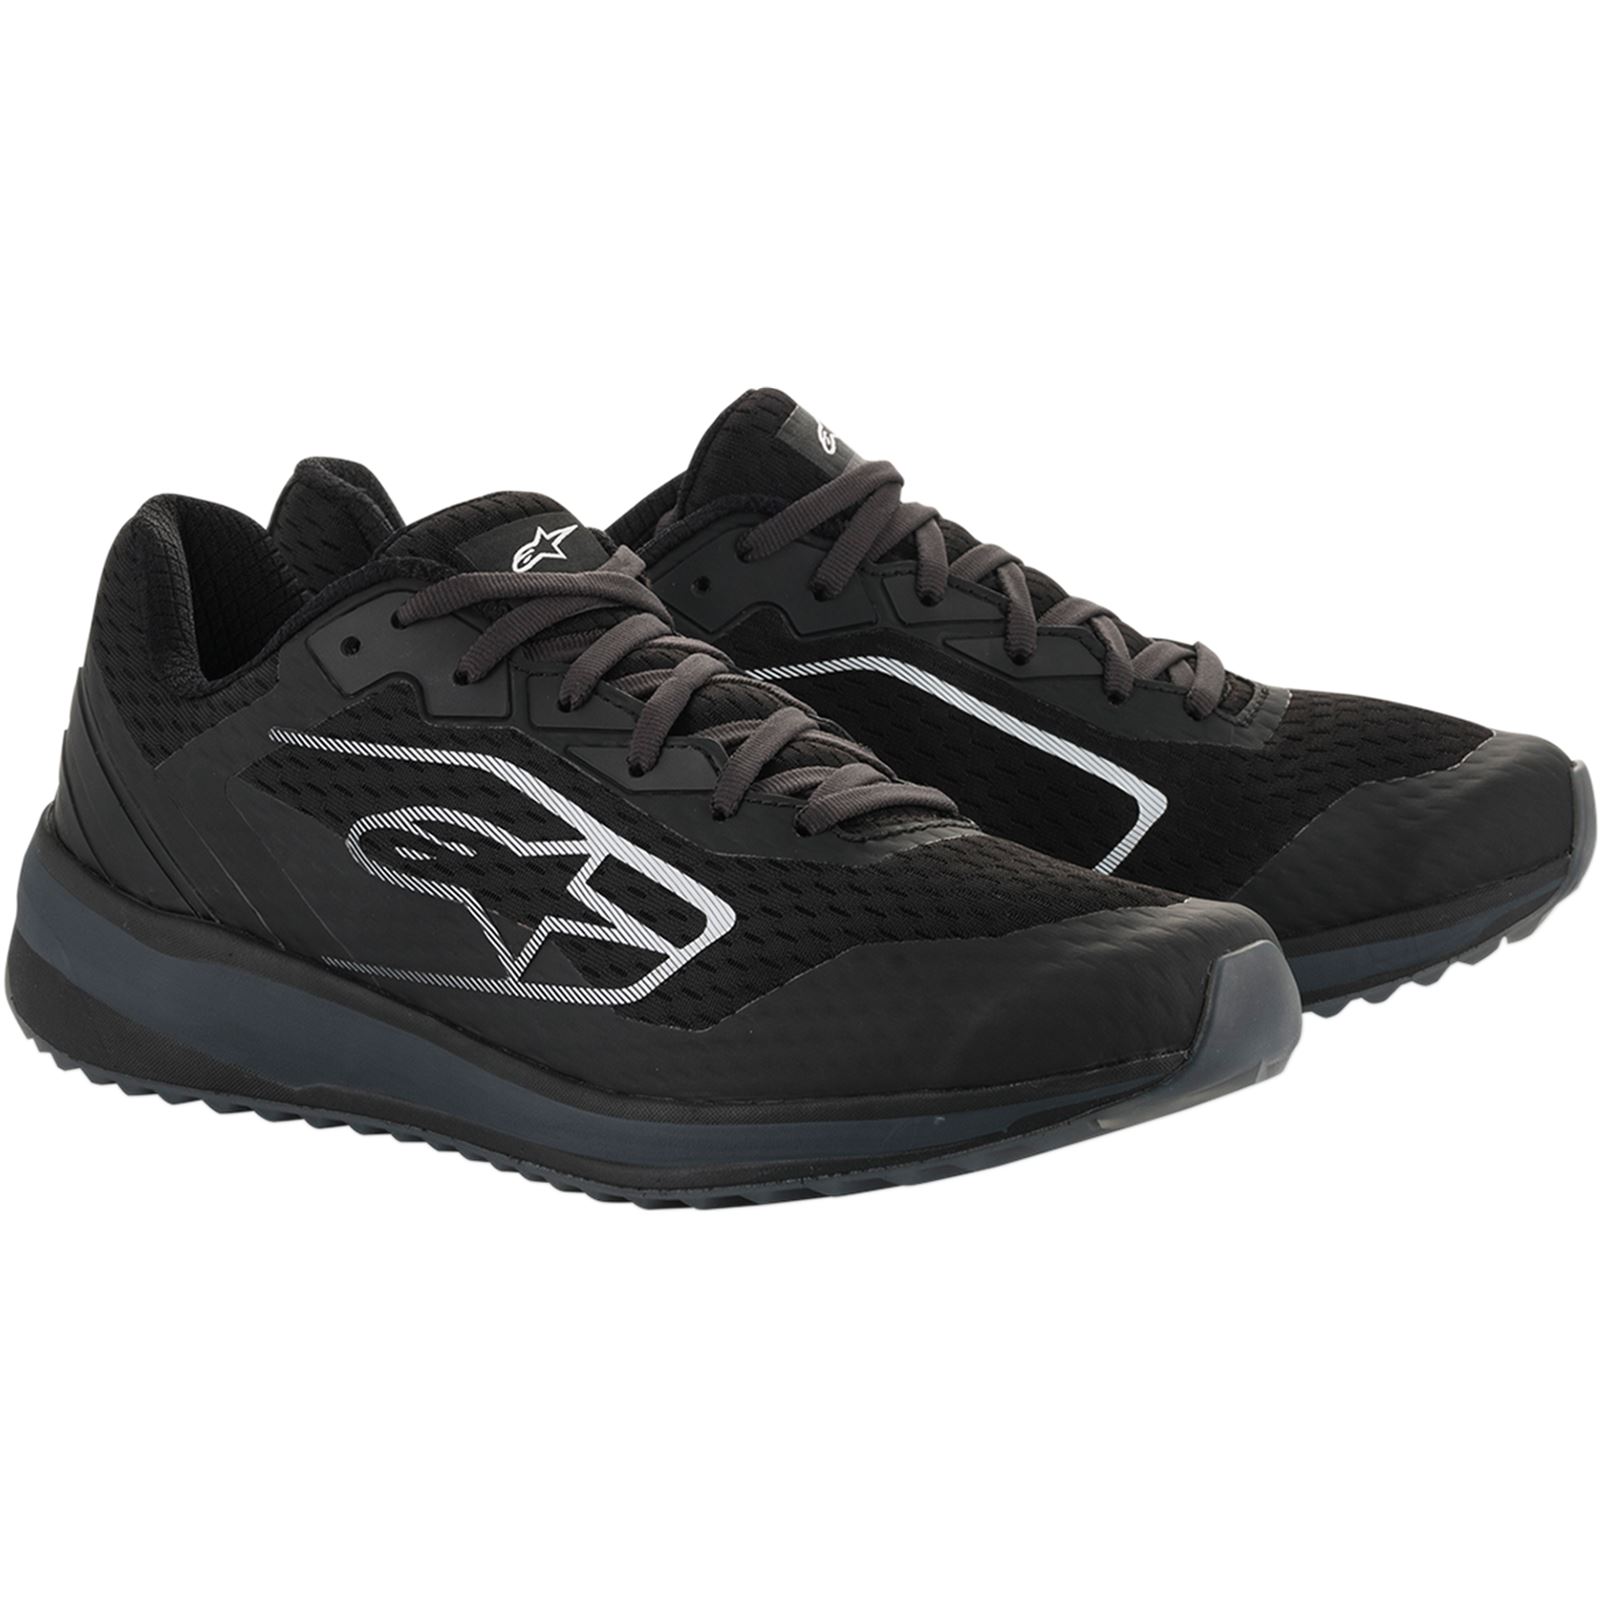 Alpinestars Meta Shoes - Black/Dark Grey - Size 11.5